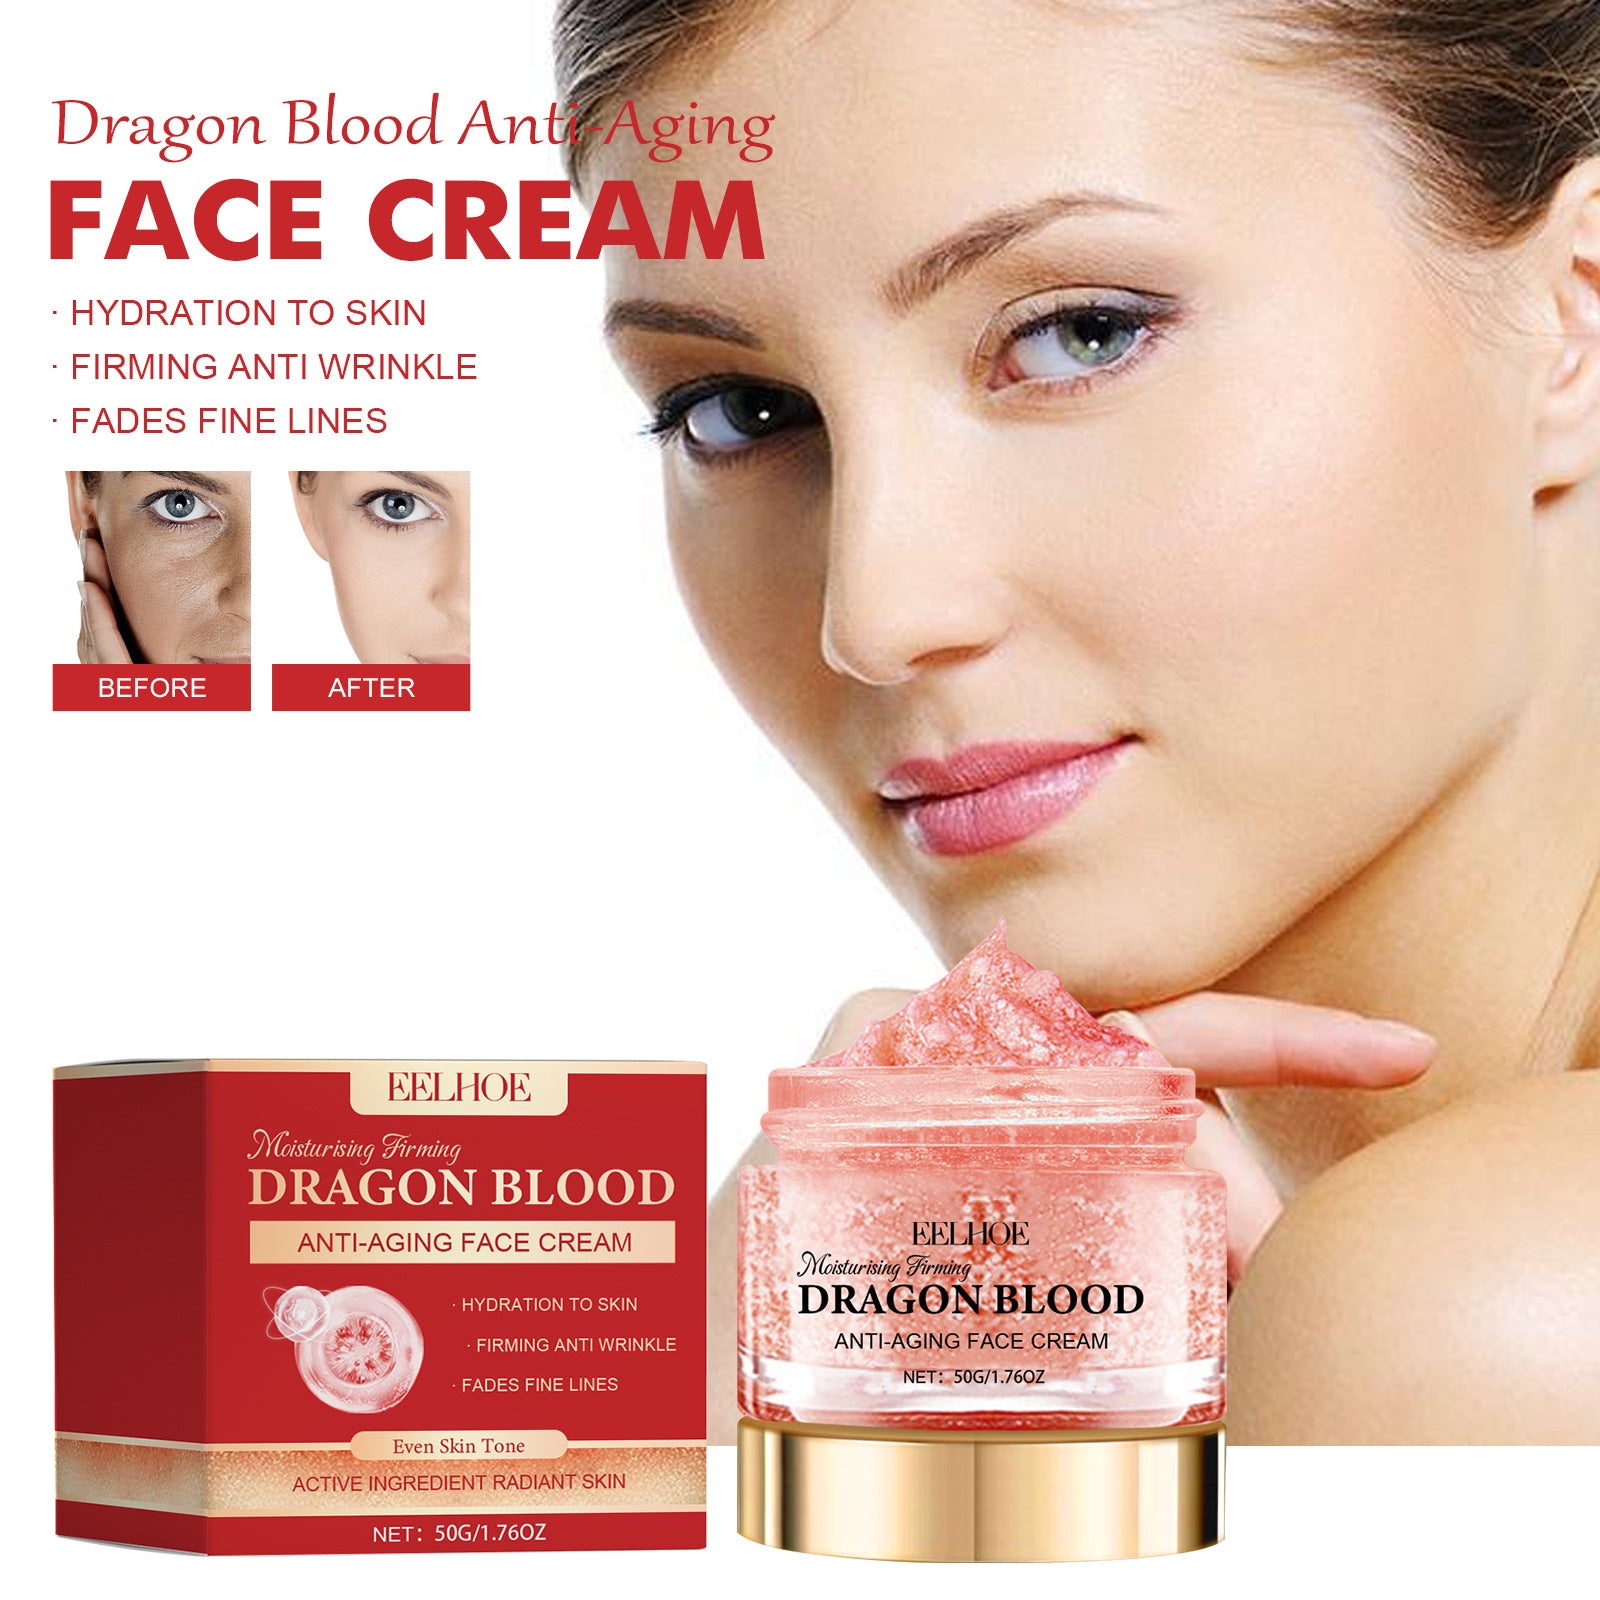 BROWSLUV™ Dragon Blood Moisturizing Facial Cream - BUY 1 GET 1 FREE